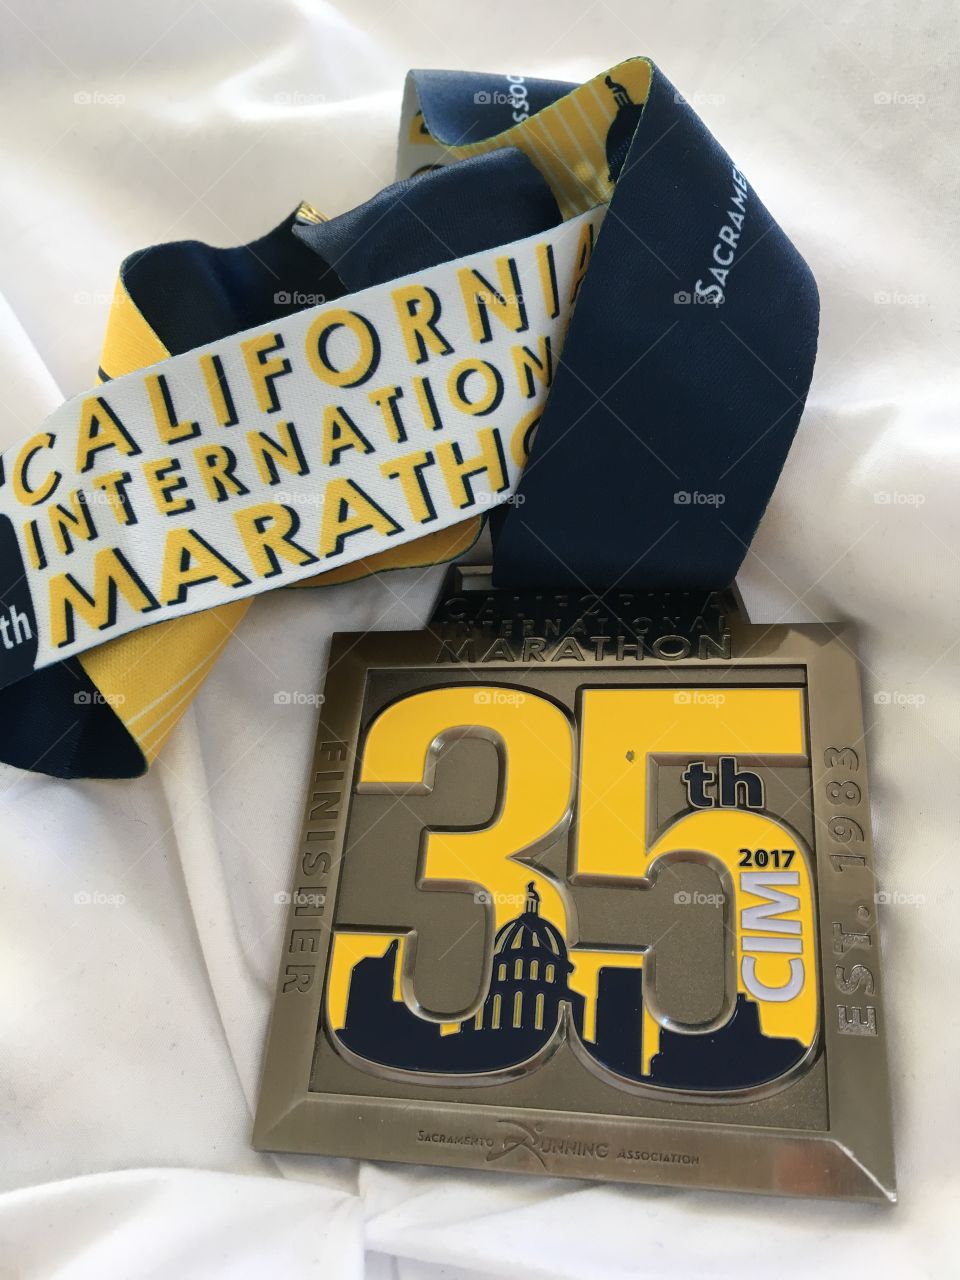 California international marathon medal 2017 